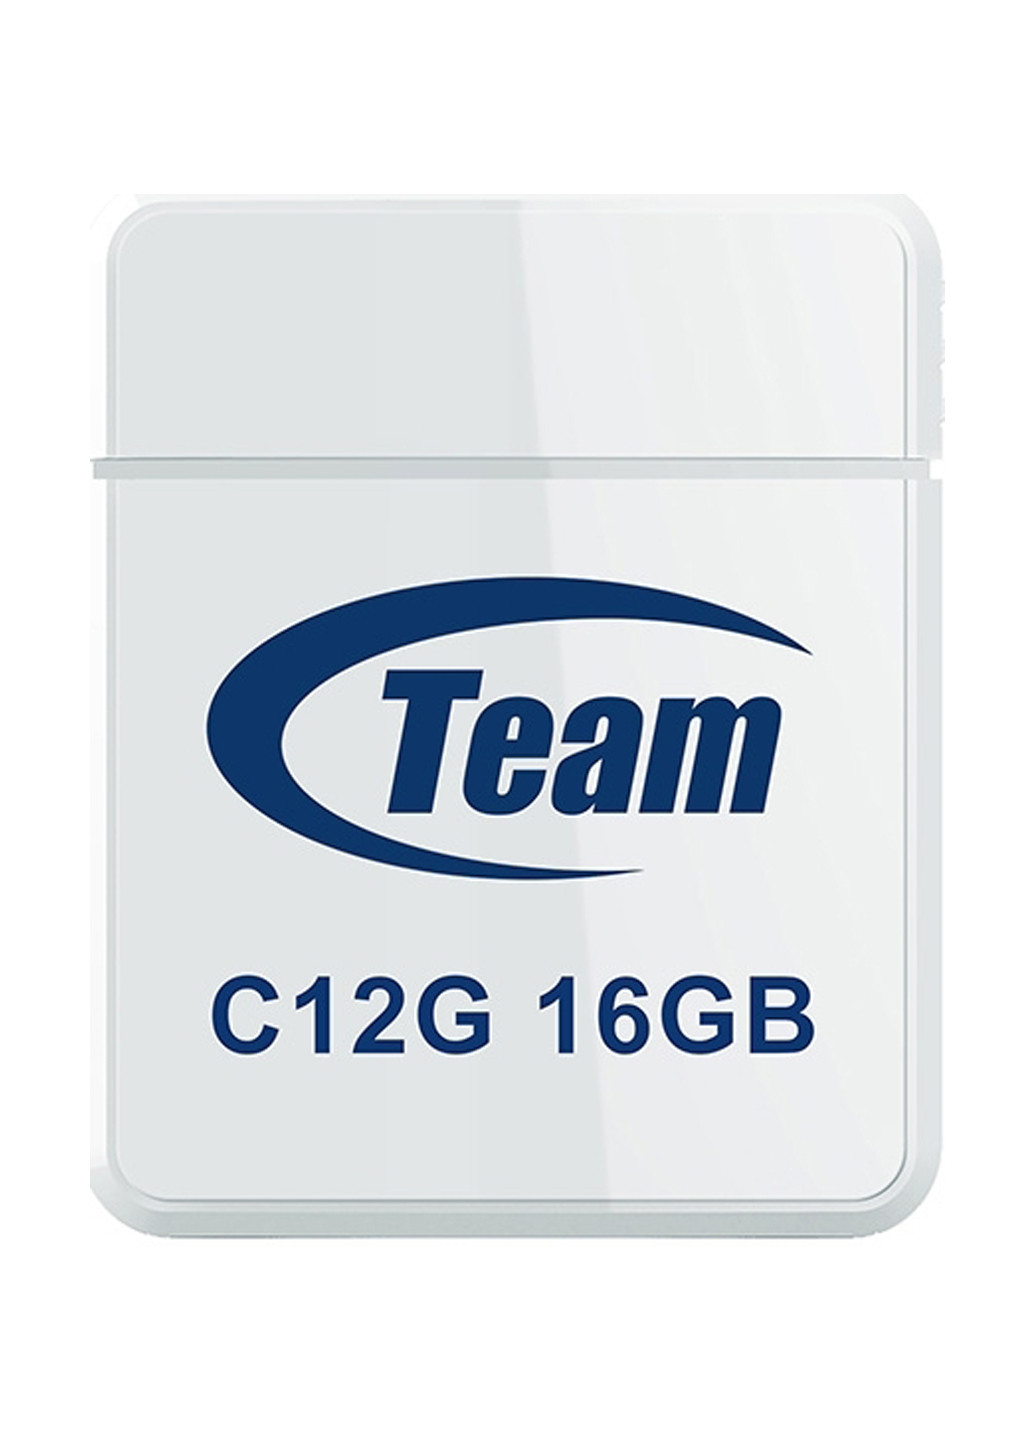 Флеш память USB C12G 16Gb White (TC12G16GW01) Team флеш память usb team c12g 16gb white (tc12g16gw01) (134201784)